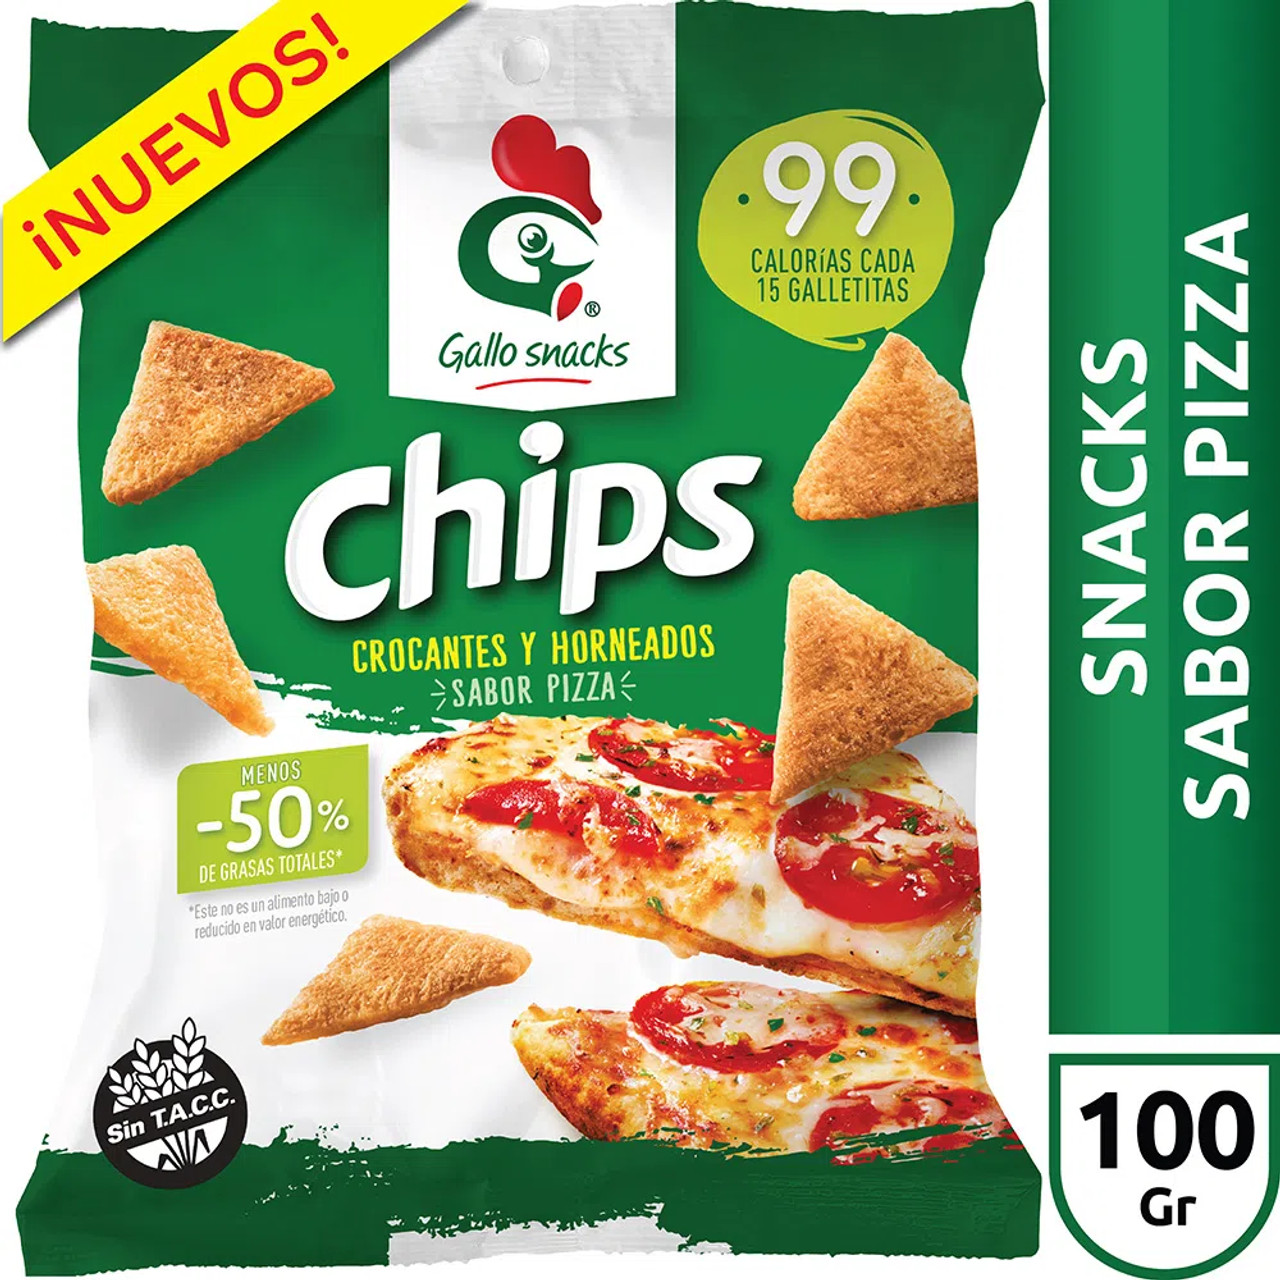 Gallo Chips Crocantes y Horneadas Baked & Crunchy Snack Pizza